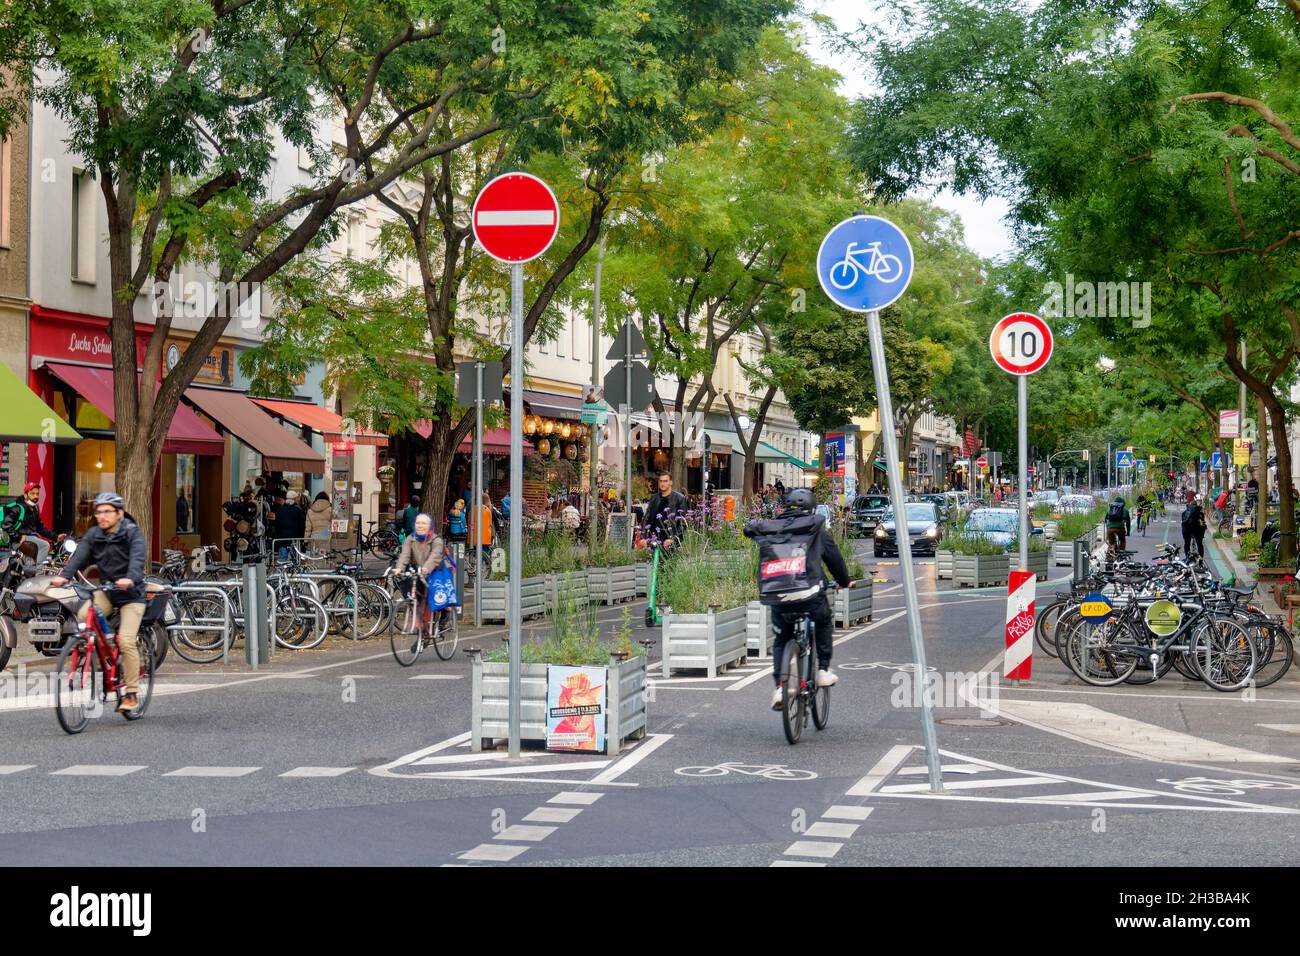 Fahrradwege extra breite in der Bergmannstrasse in Berlin-Kreuzberg, geschützer Zwei-Richtungs-Radweg. Gorillas Fahrradkurier, Verkehrsberuhigung, TEM Foto Stock